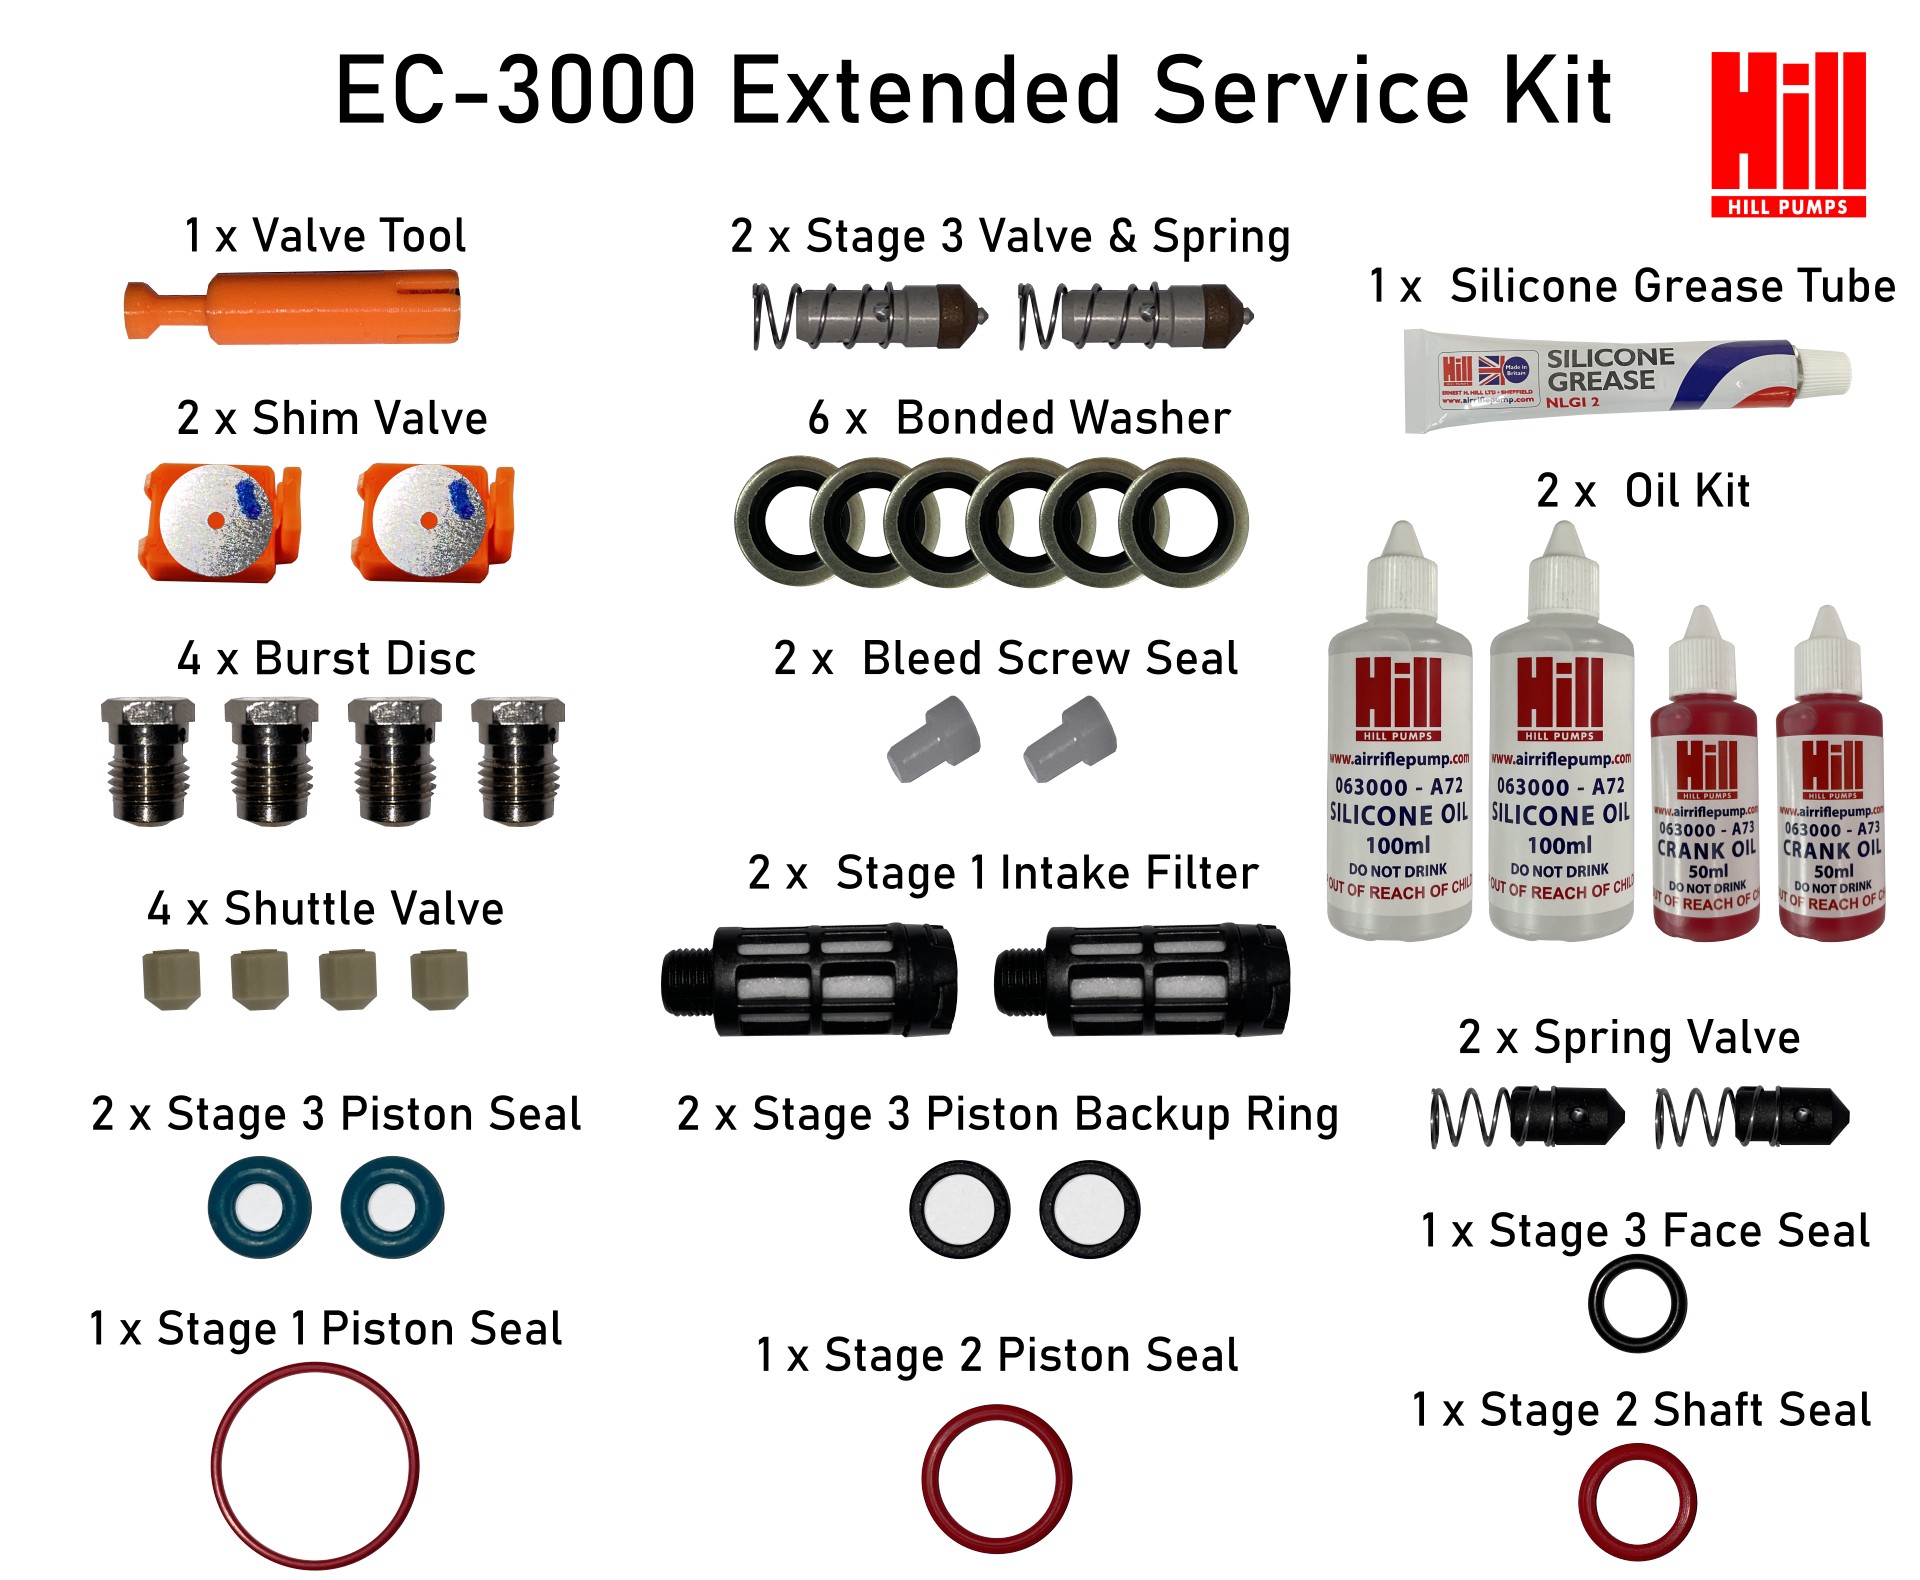 EC-3000 Extended Service Kit